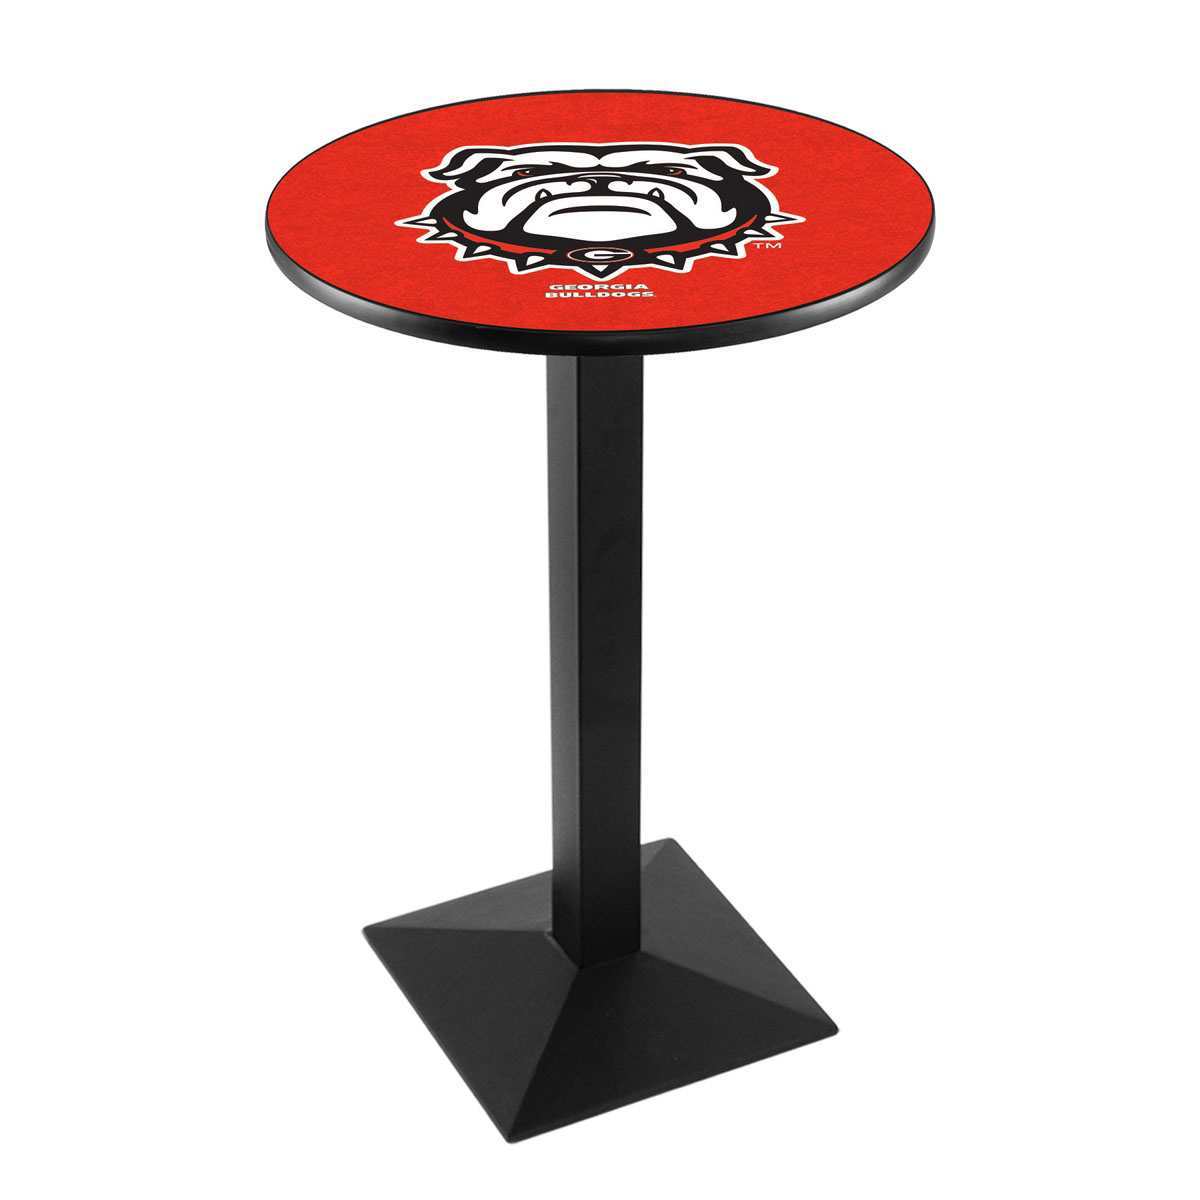 University Of Georgia (bulldog) Logo Pub Bar Table With Square Stand